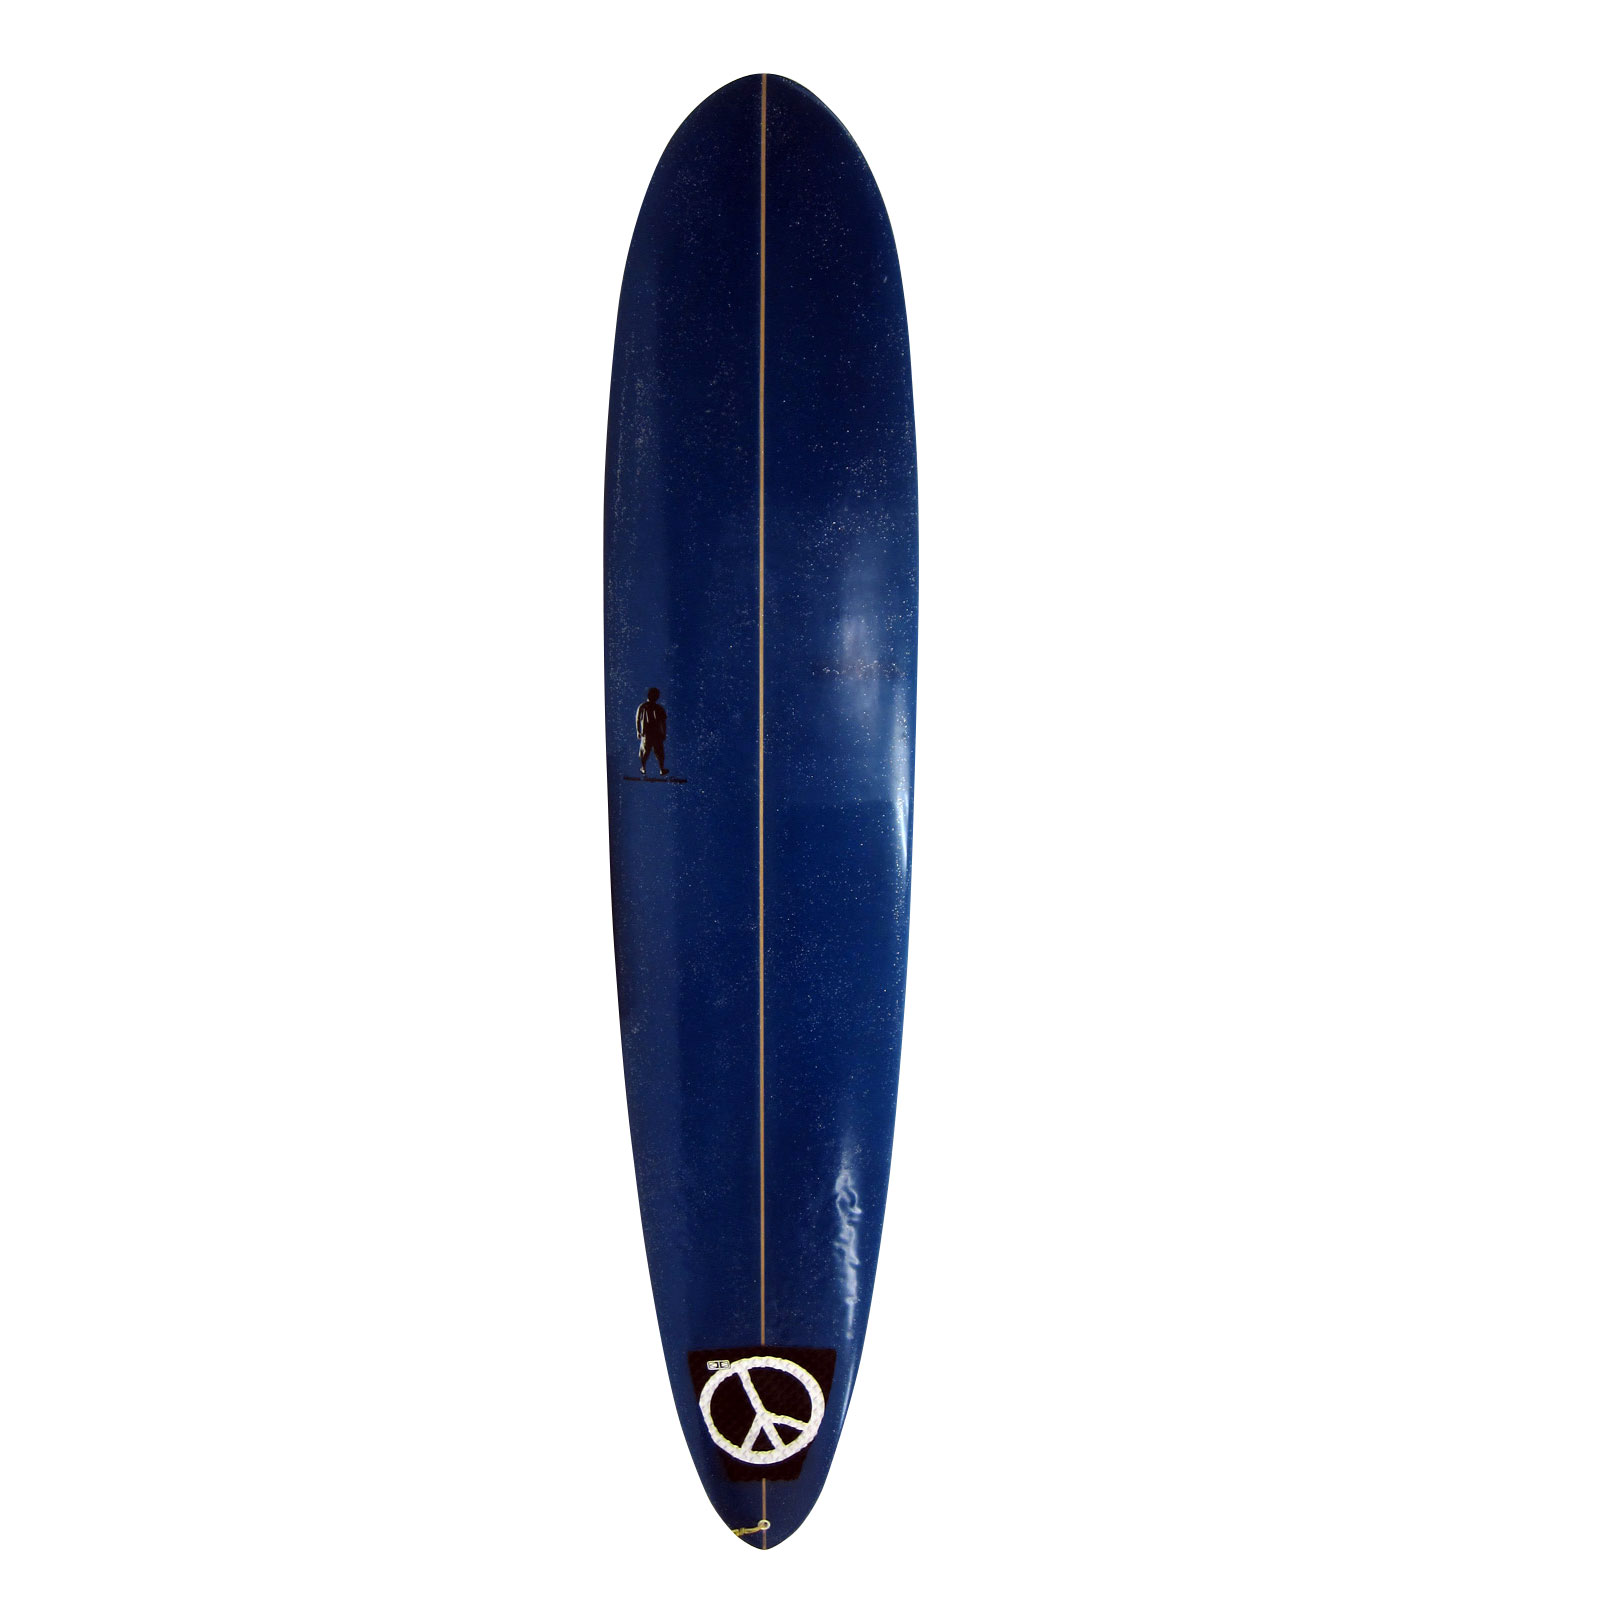  / KEKOA UEMURA Surfboard Design  / 9`1 Performance Custom 